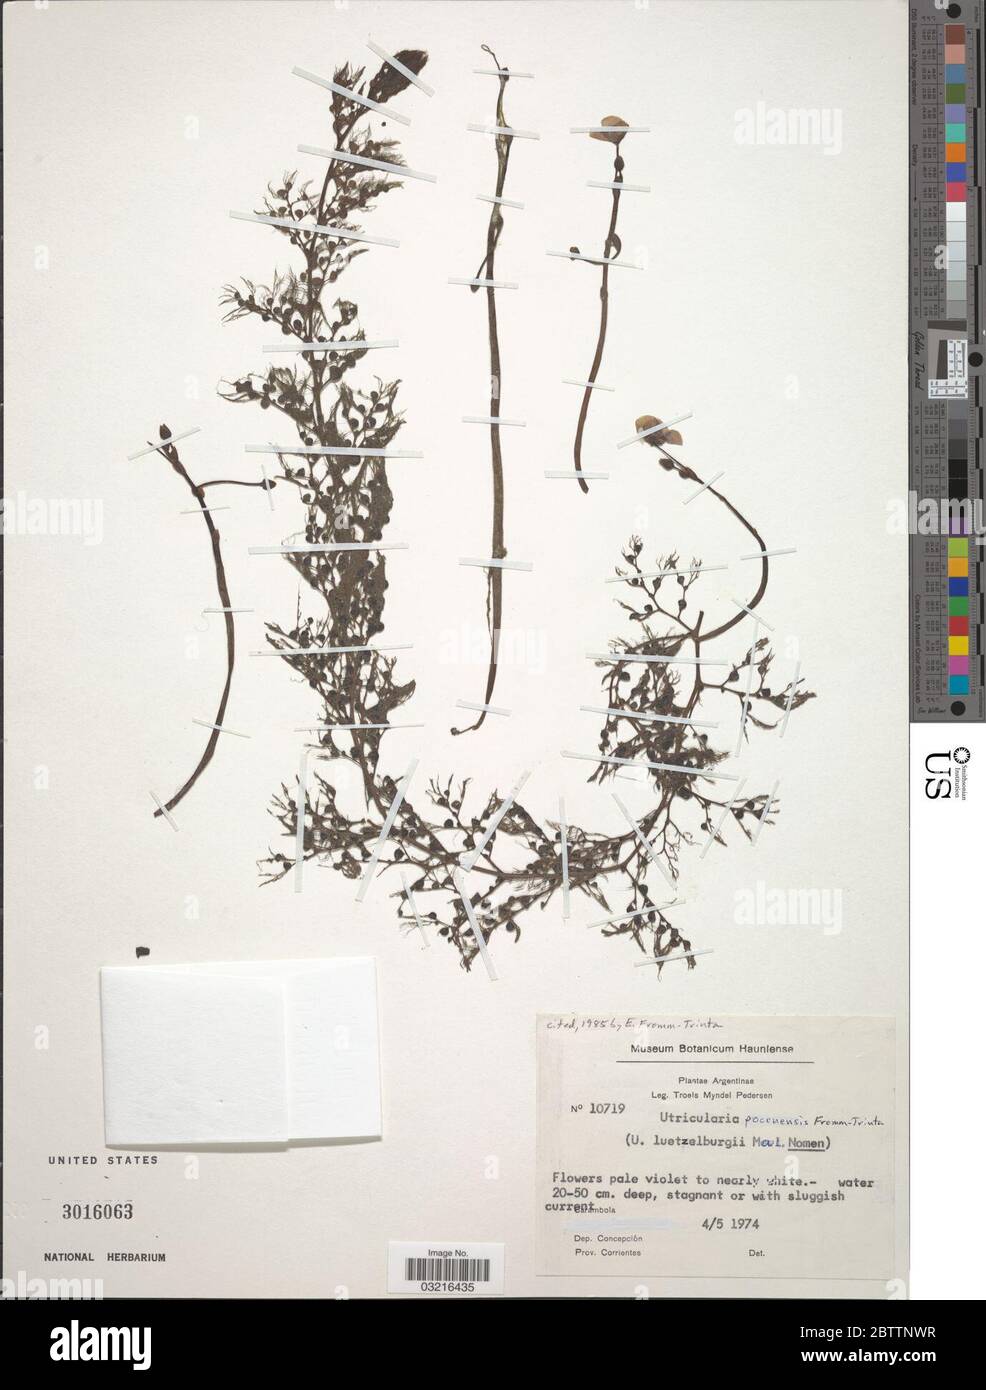 Utricularia poconensis Fromm. Banque D'Images